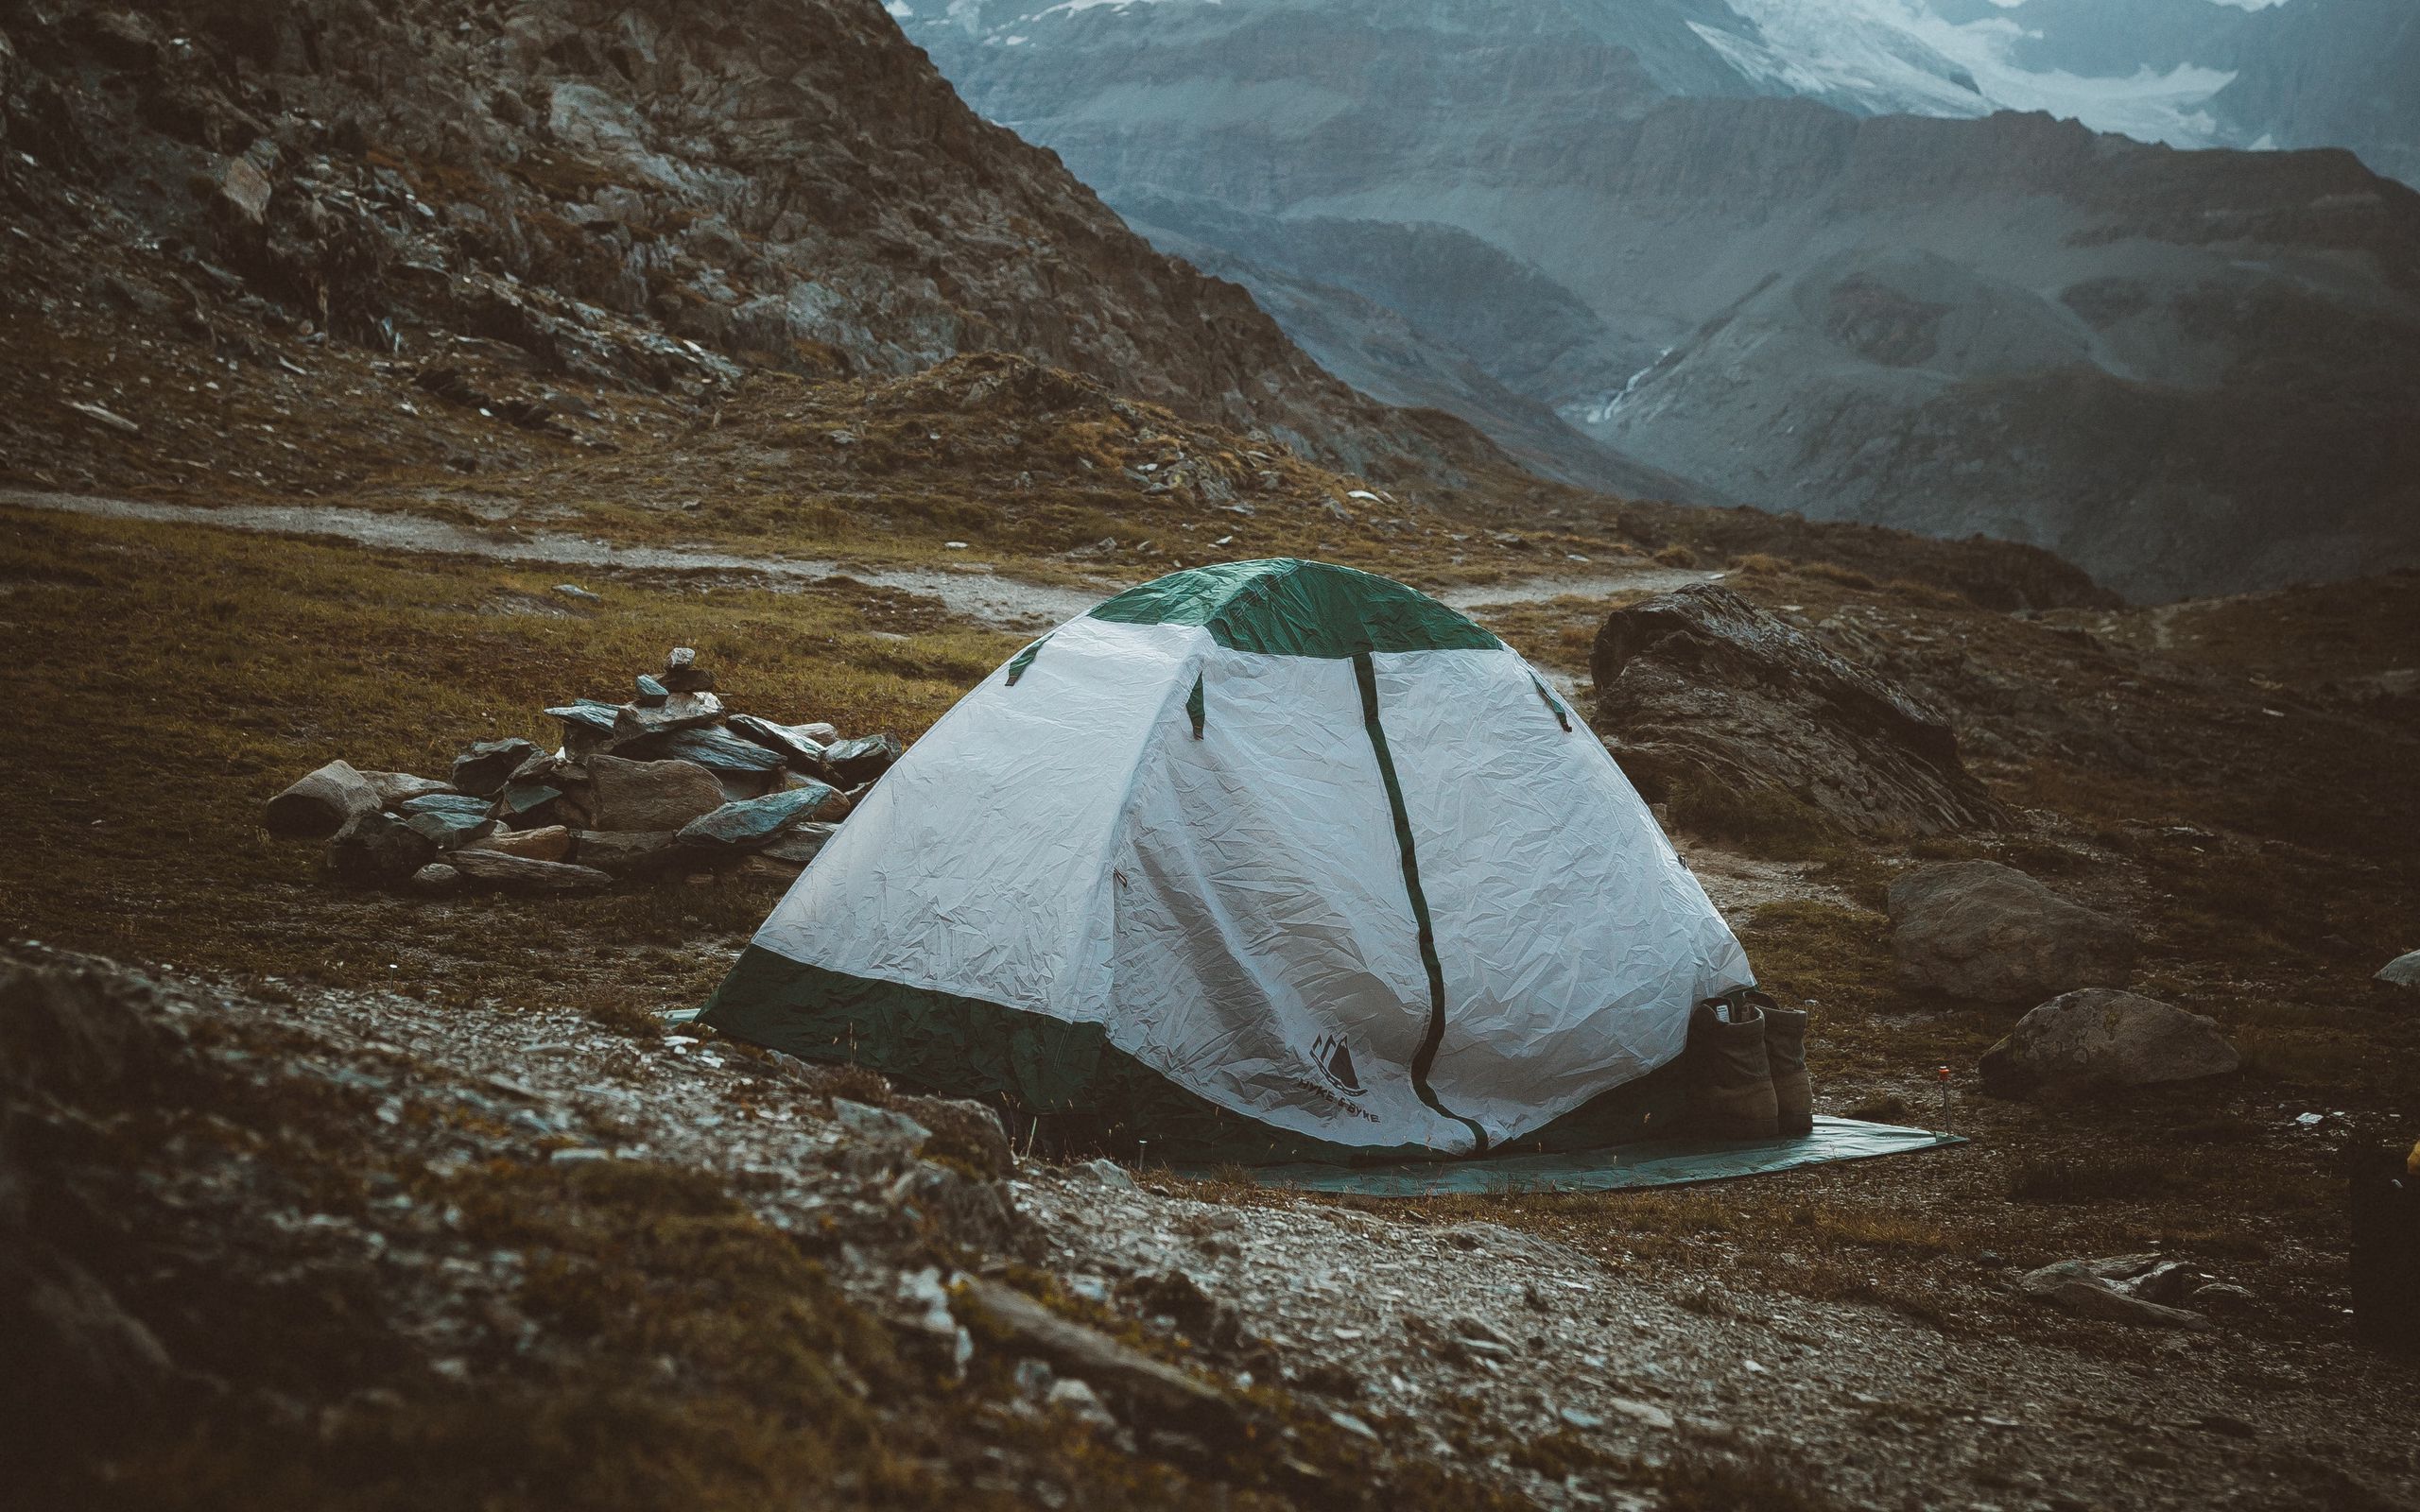 K k camping. Палатка в горах. Палатки на скалах. Палатка горы скалы.